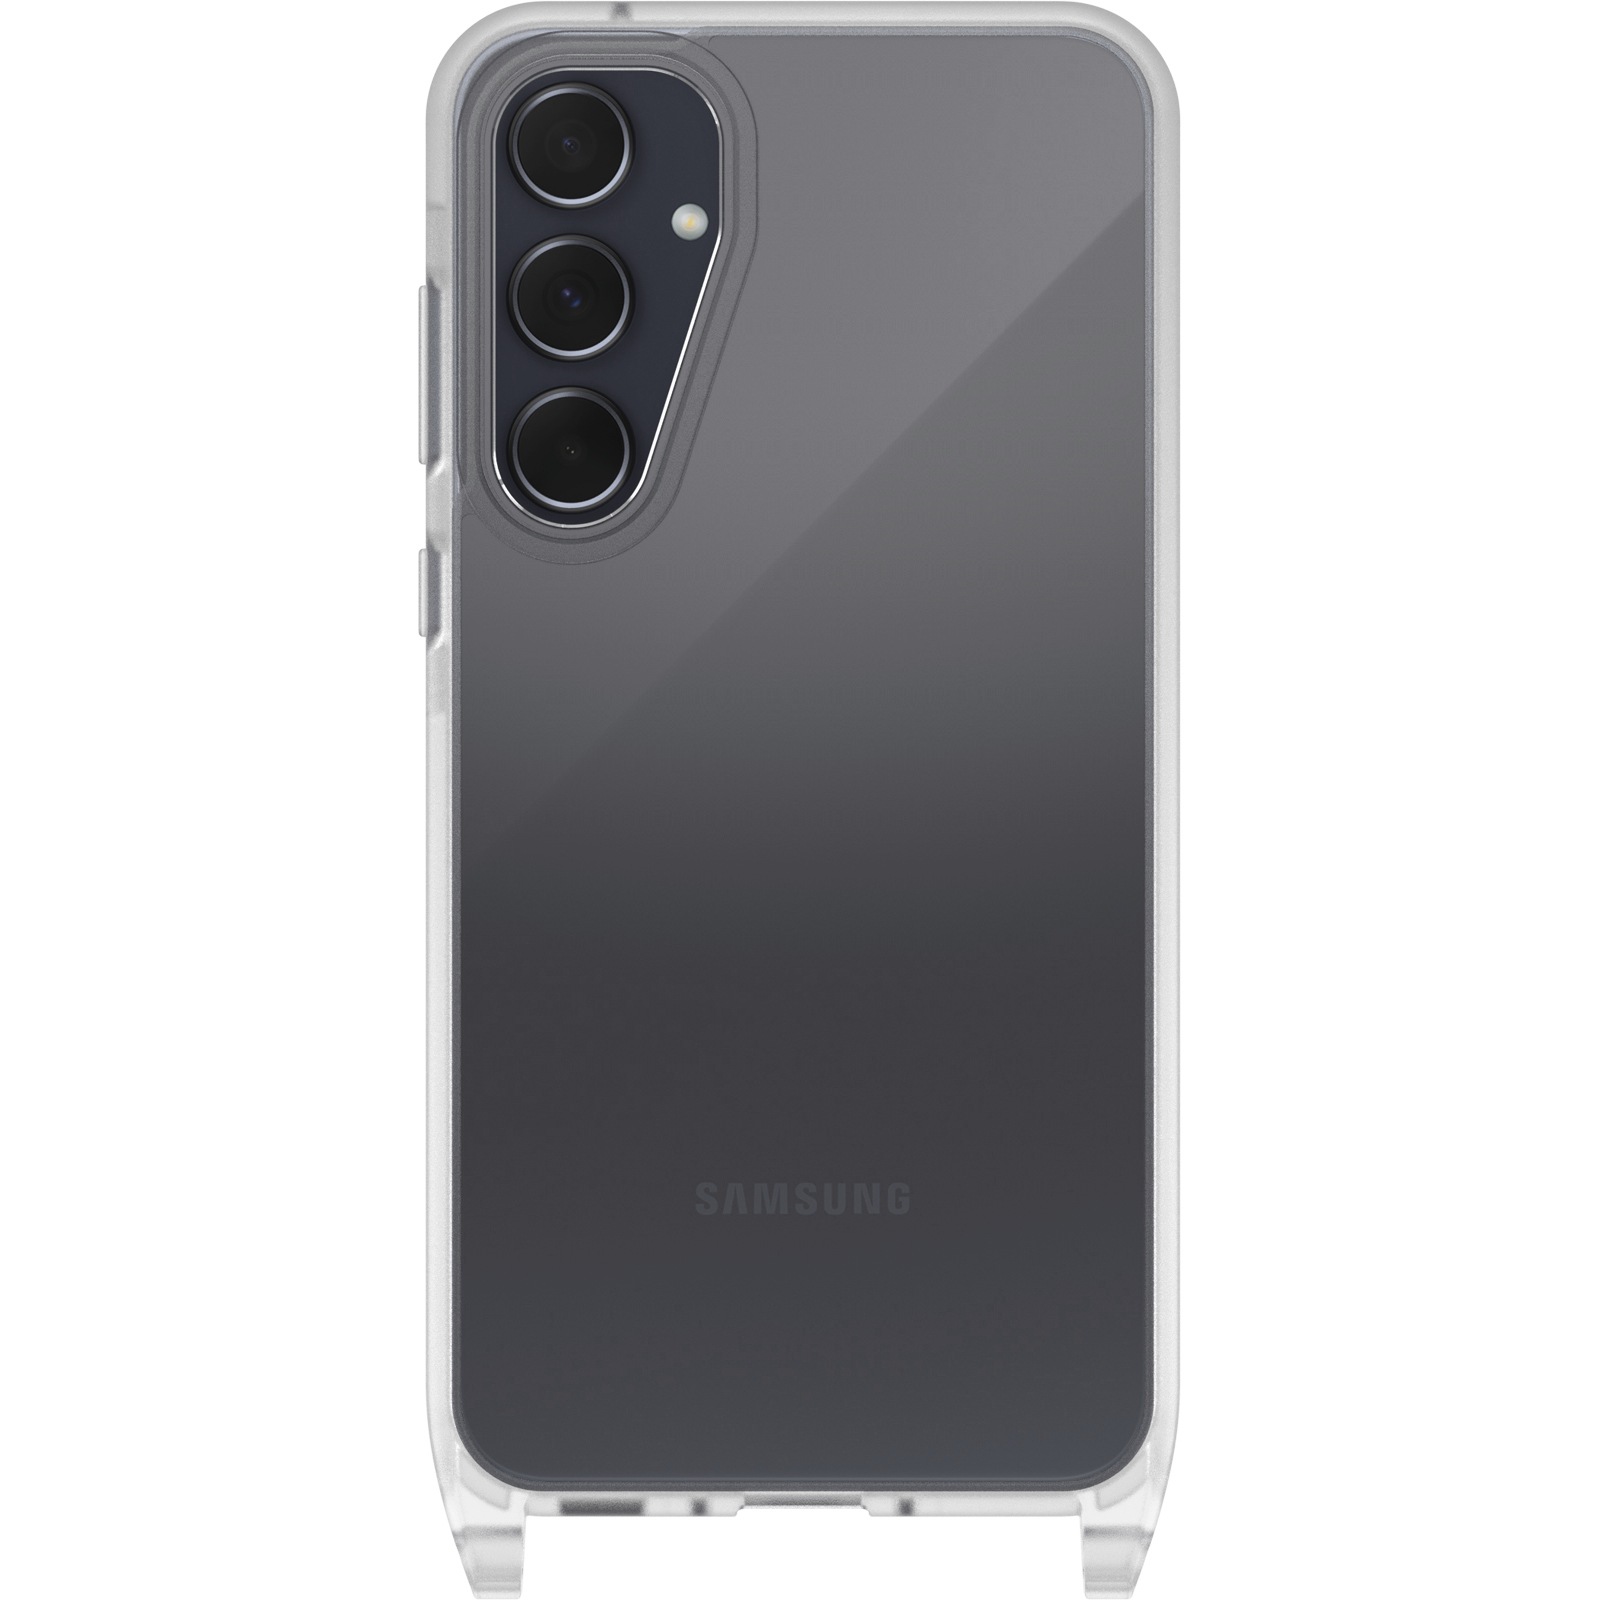 Otterbox Handykette »React Necklace für Samsung Galaxy A35 5G«, Schutzhülle, Cover, Backcover